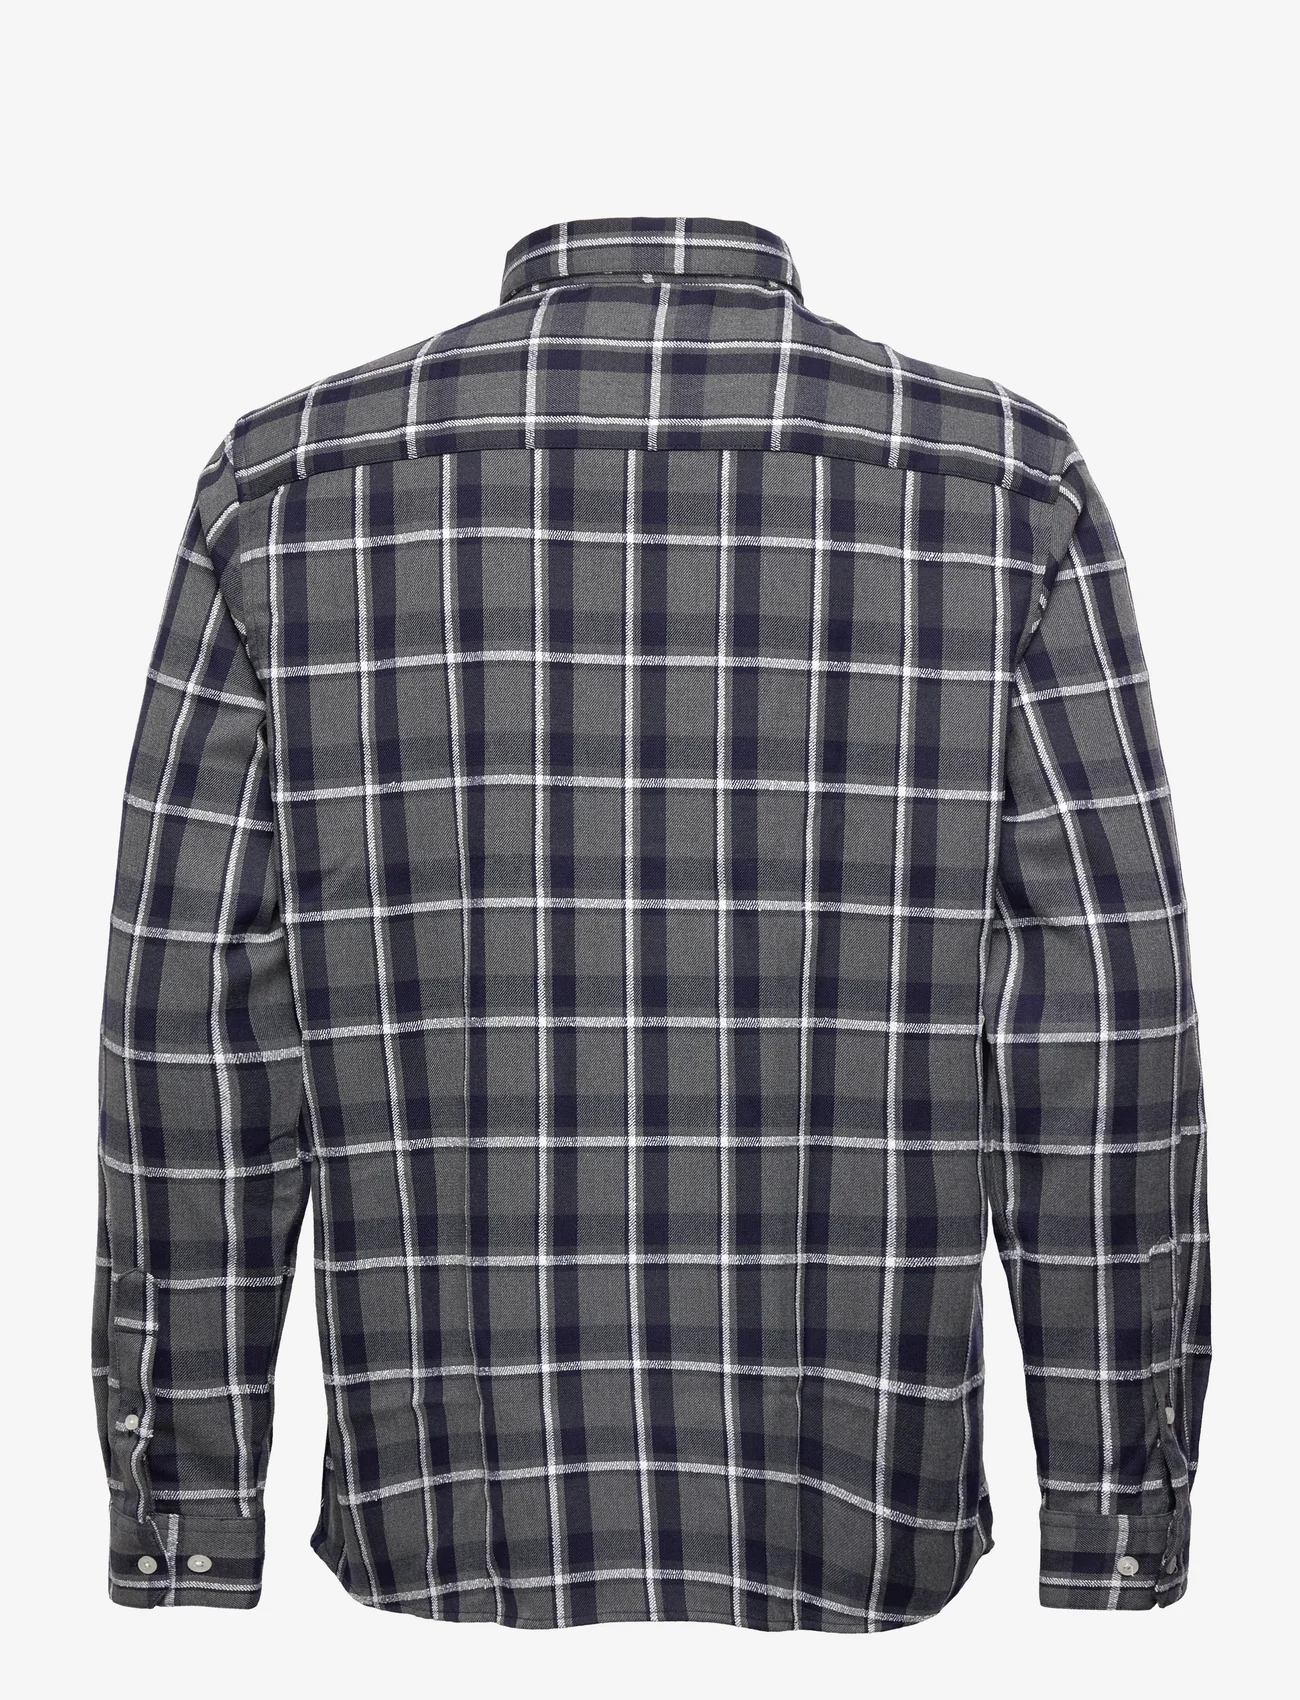 Gabba - York Texture Check LS Shirt - ternede skjorter - multi check - 1